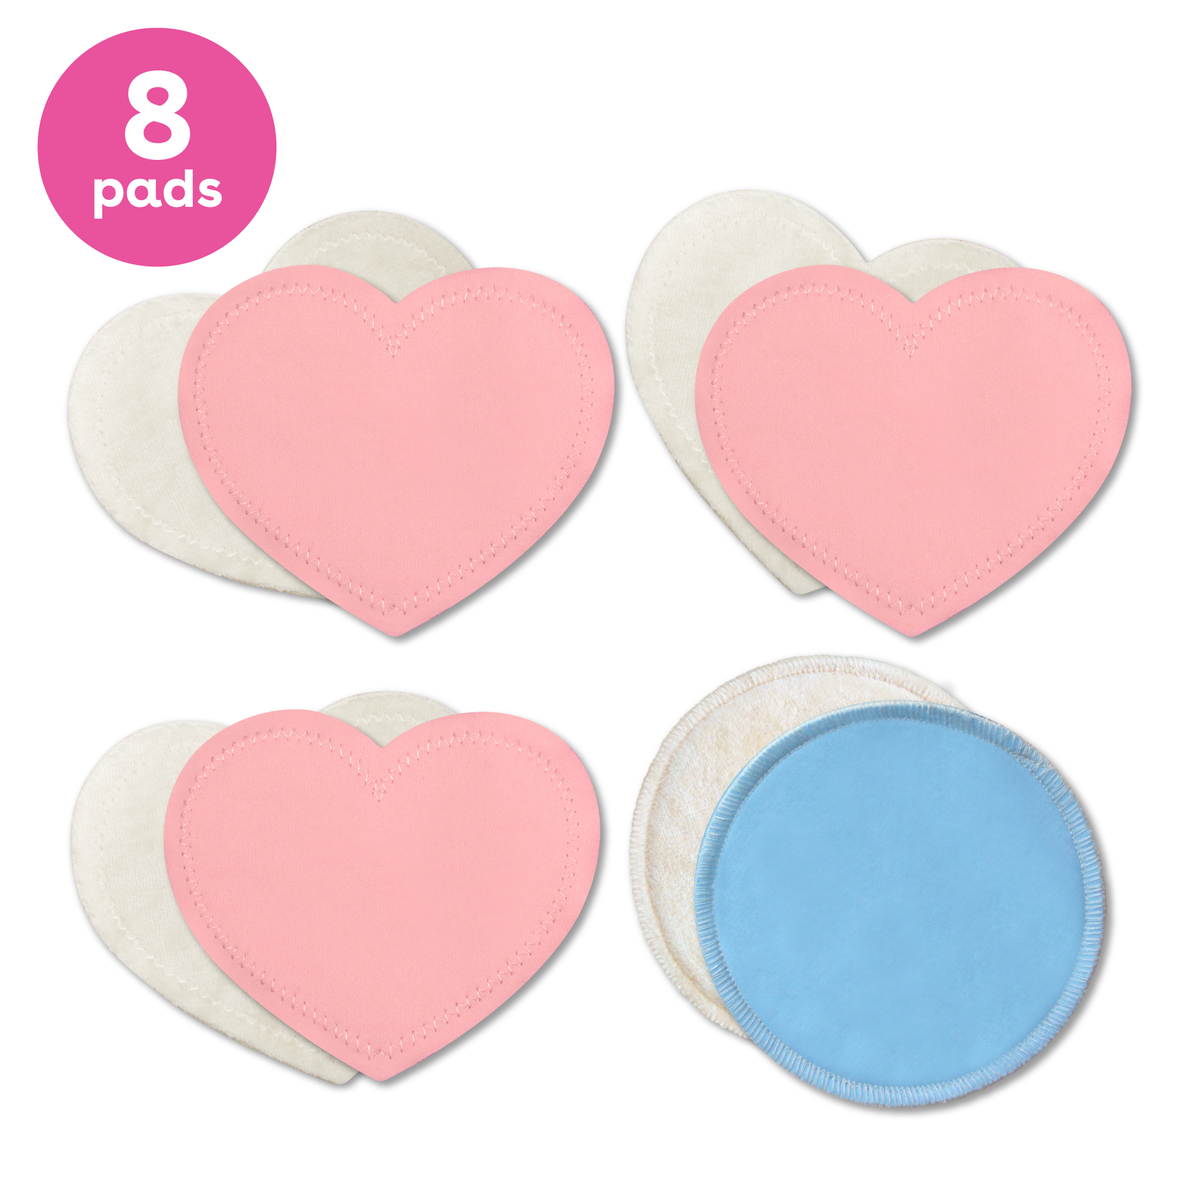 8 Reusable Nursing Pads, 6 light pink regular nursing pads, 2 overnight nursing pads